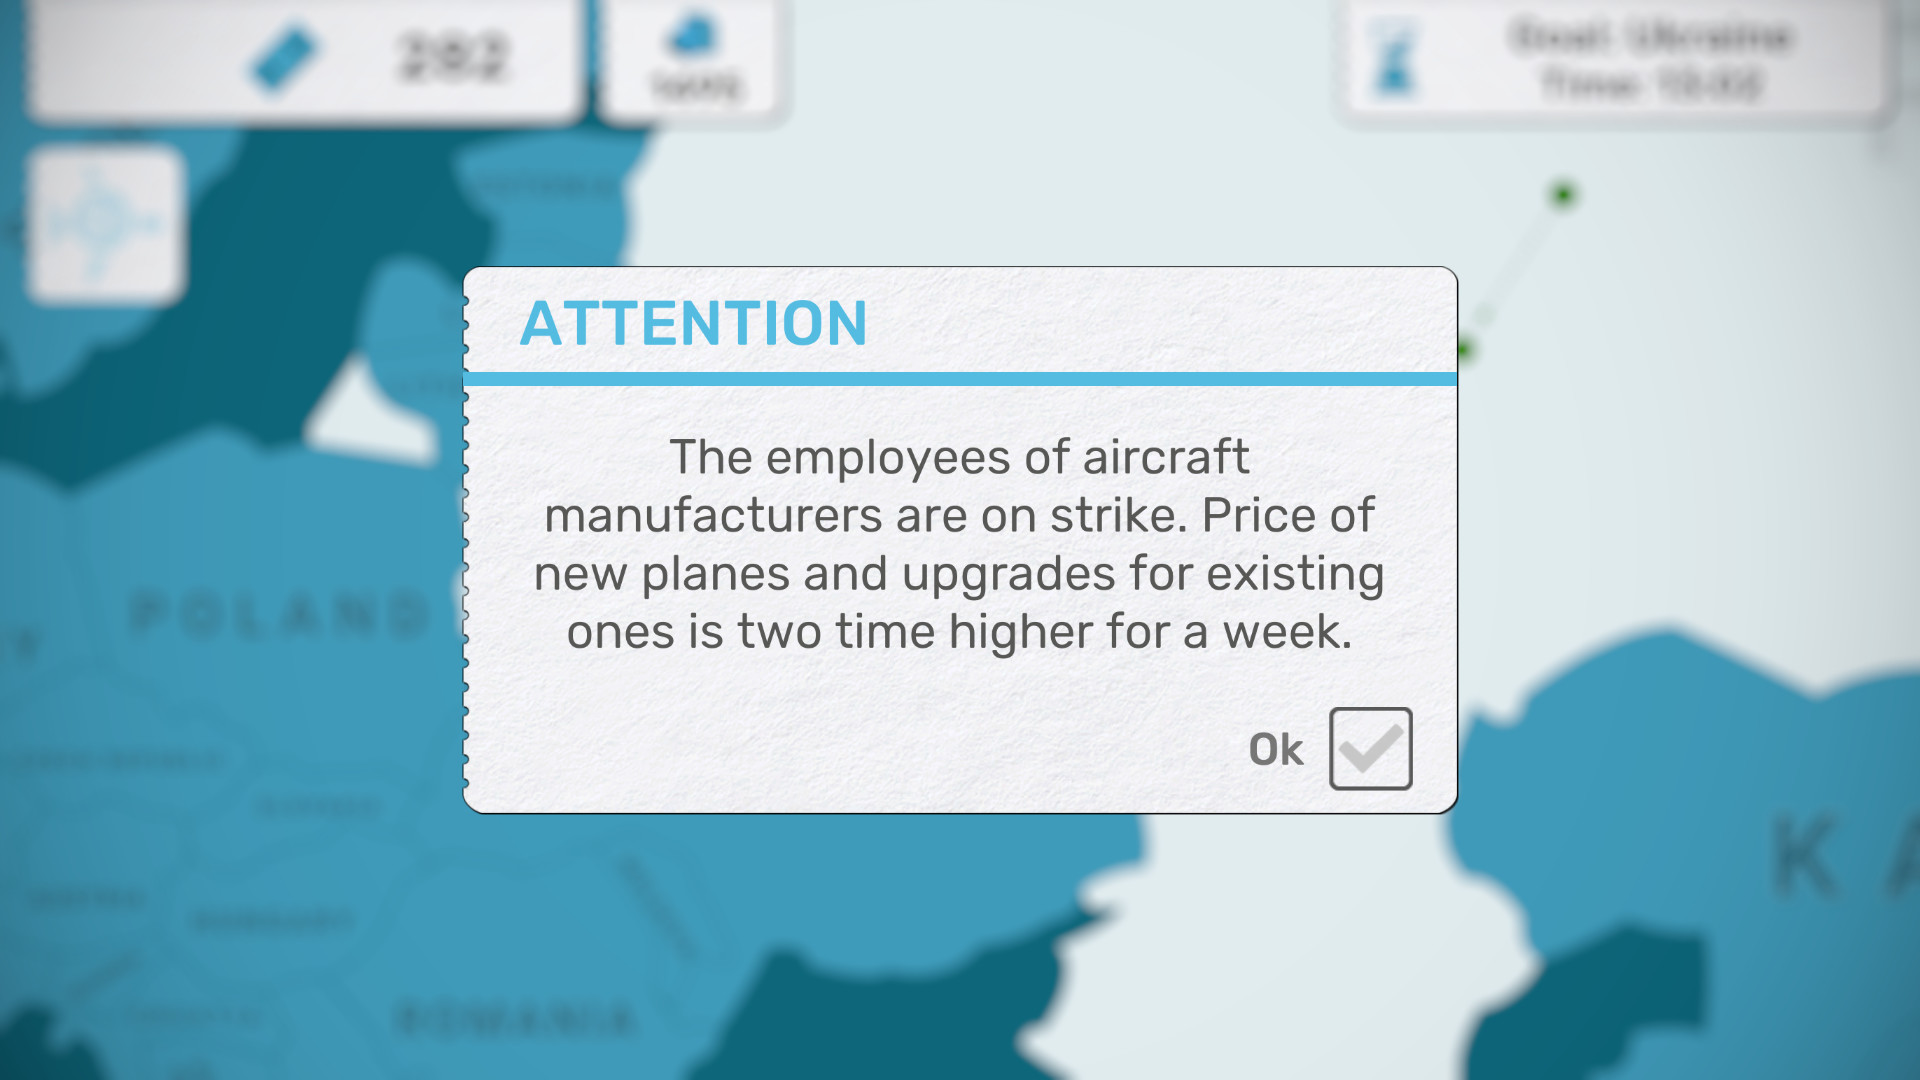 Fly Corp screenshot